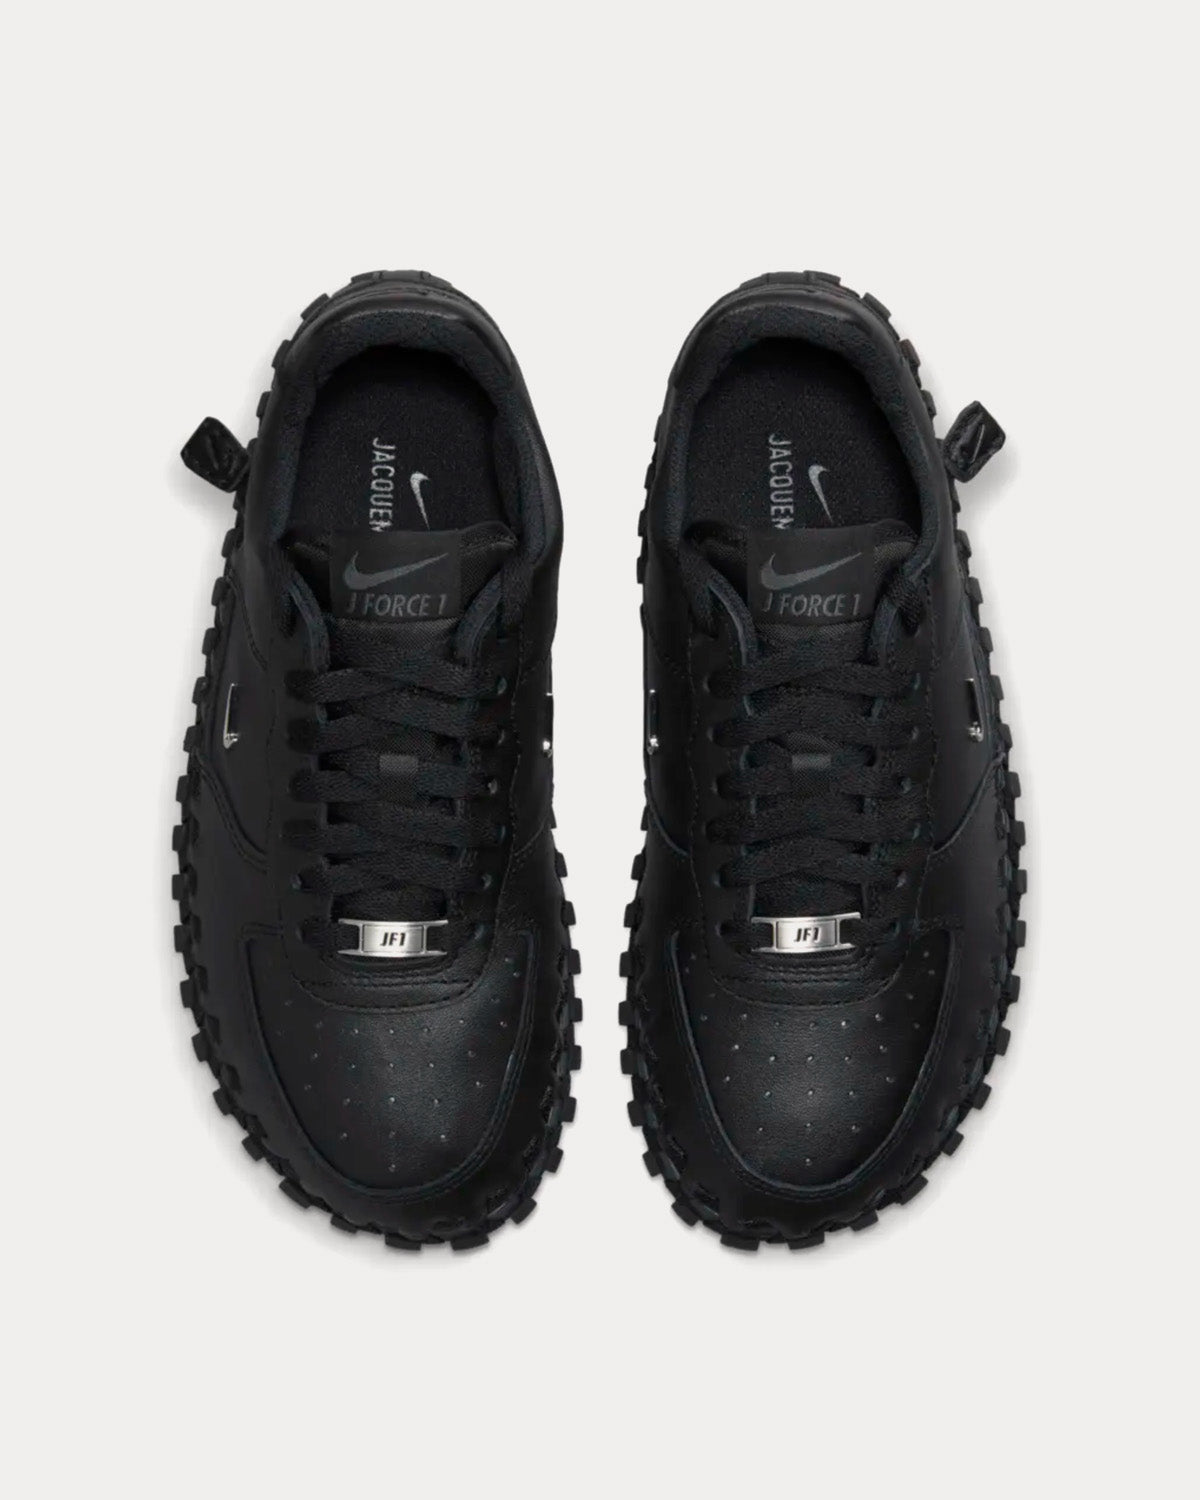 Nike x Jacquemus - J Force 1 Black Low Top Sneakers